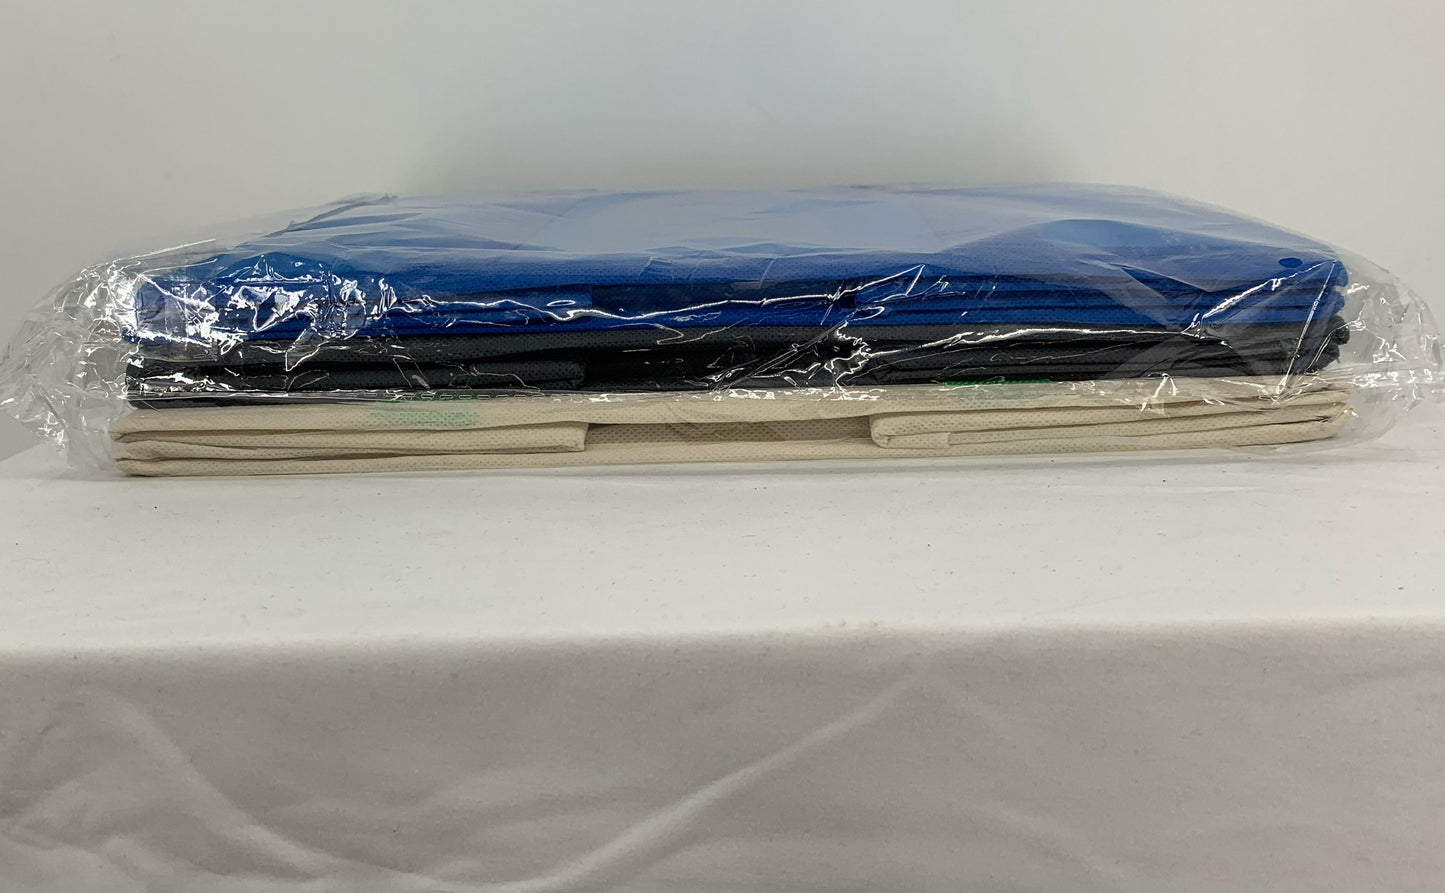 New Kennda 3-Pack Shopping Bags-Reusable Tote Bags-Heavy Duty 14”L x 11 ”W x12”H